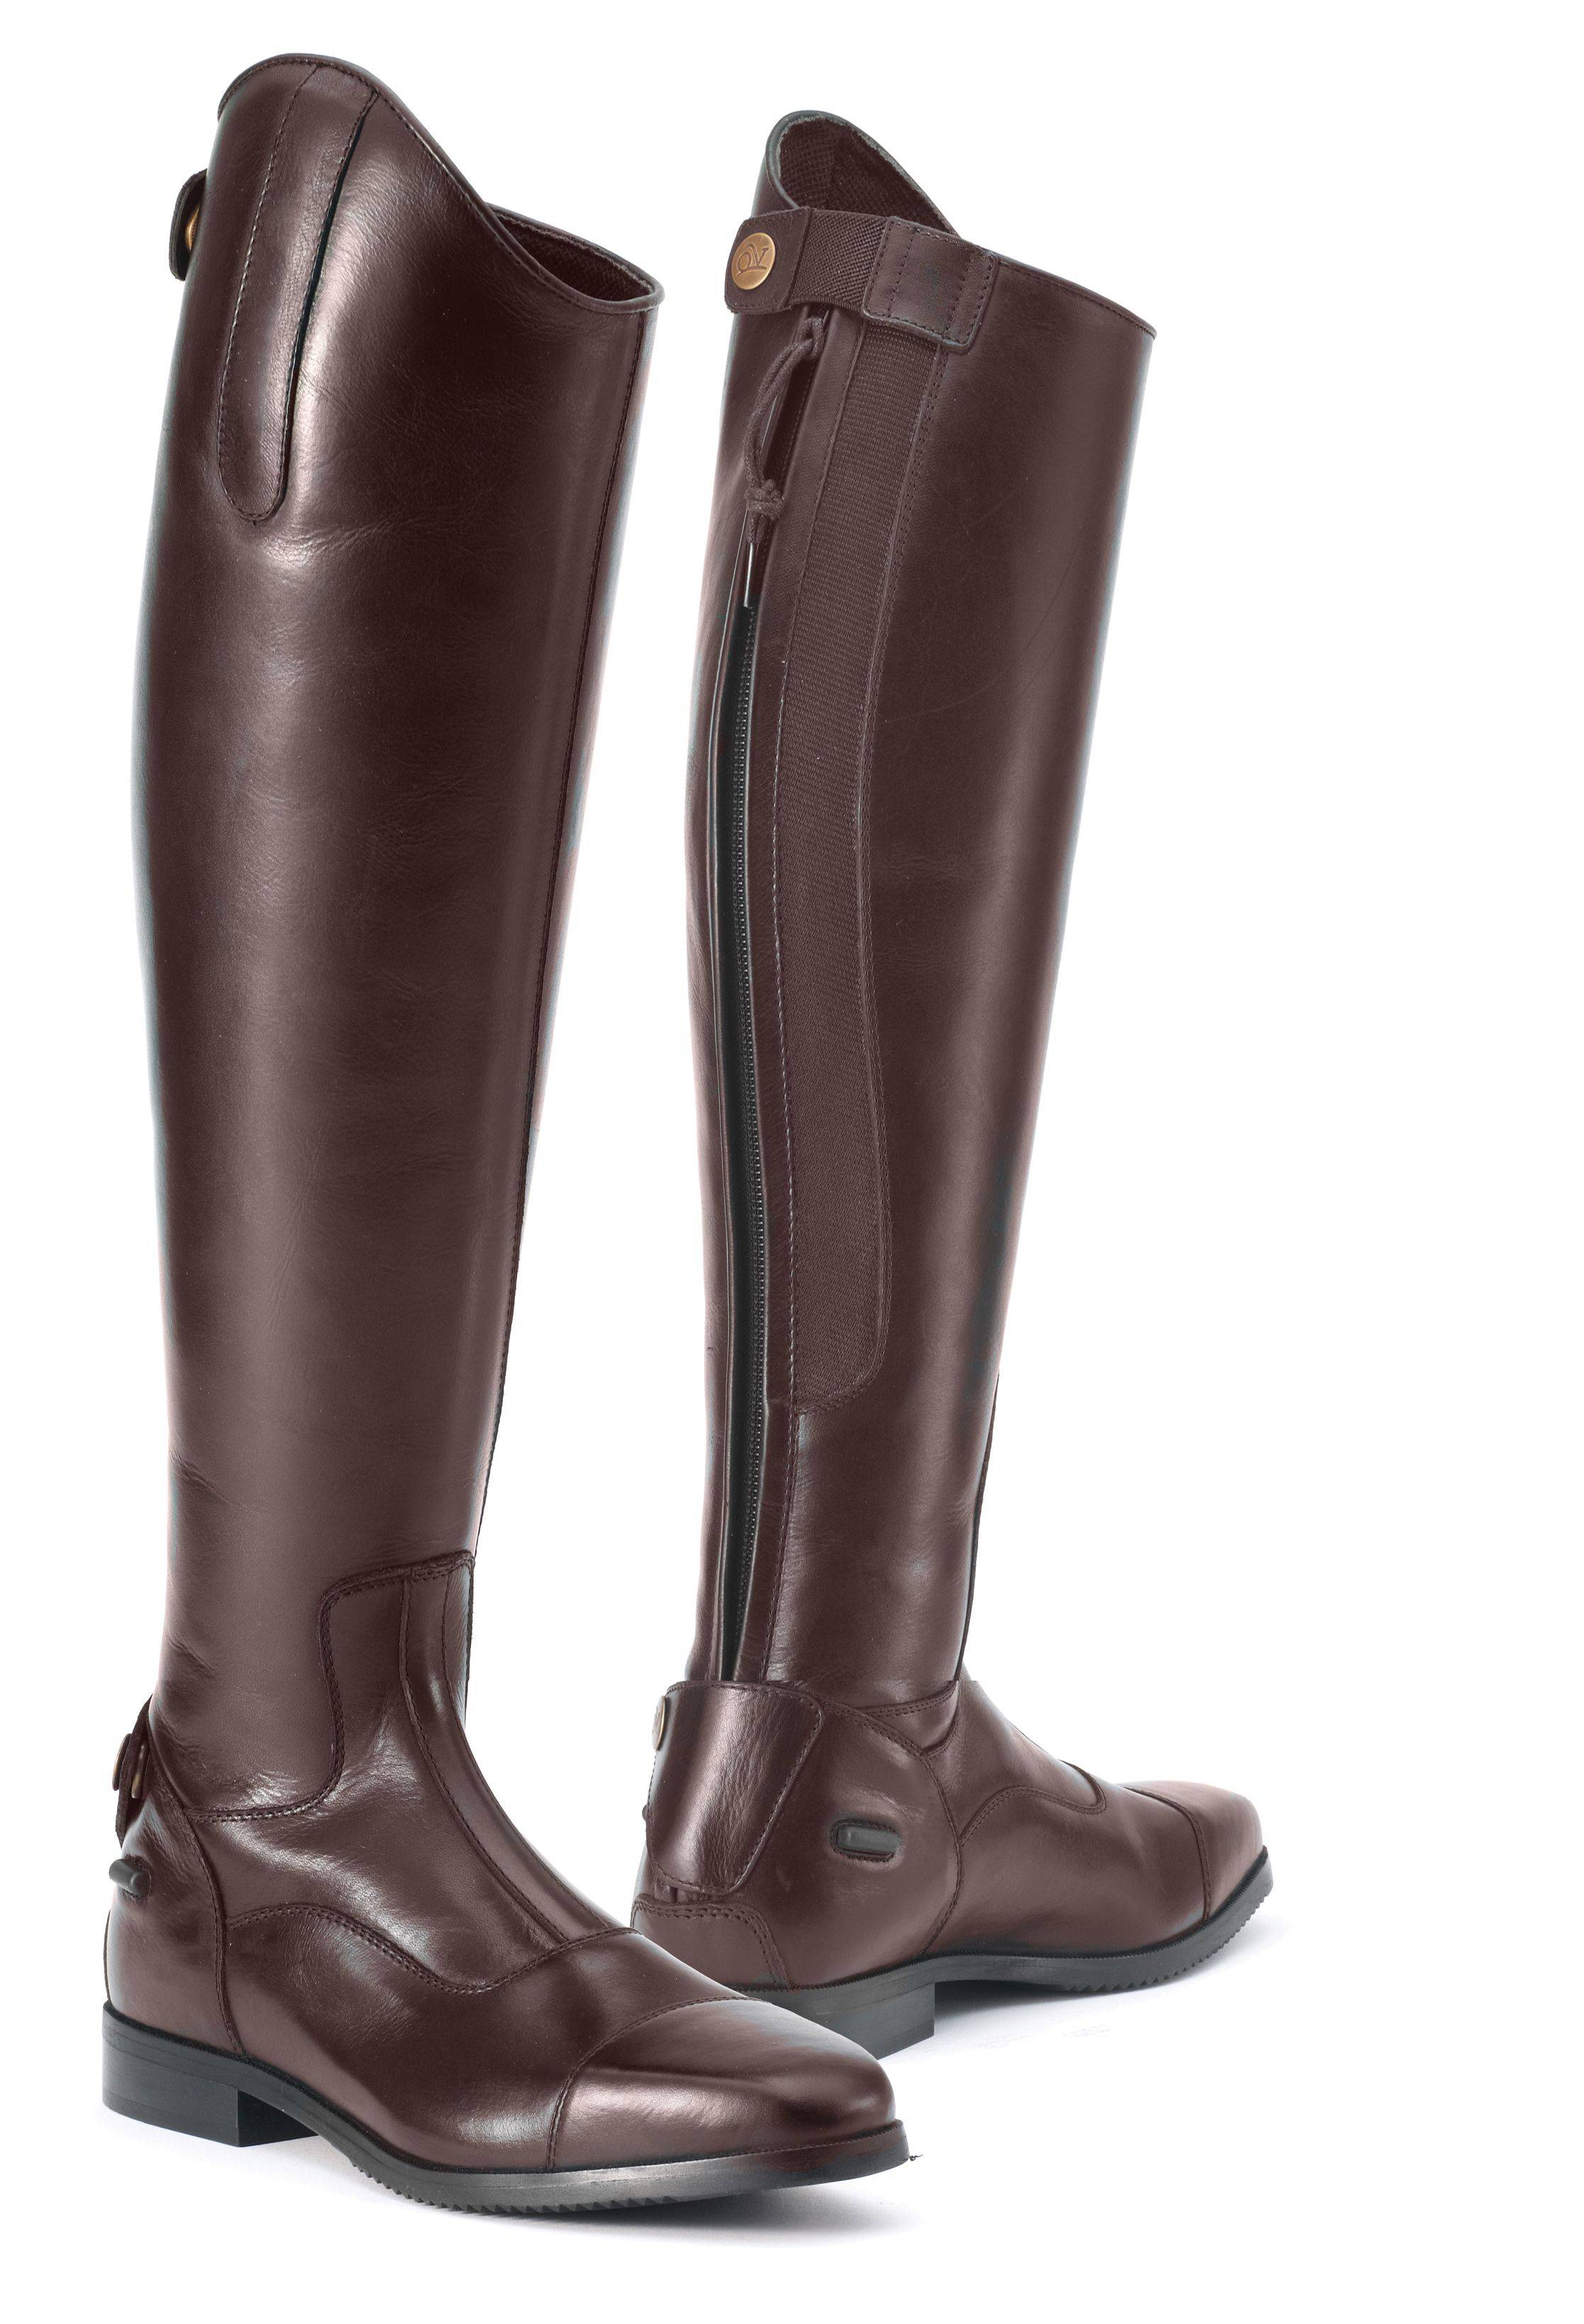 Ovation Olympia Tall Boots - Ladies, Dark Brown